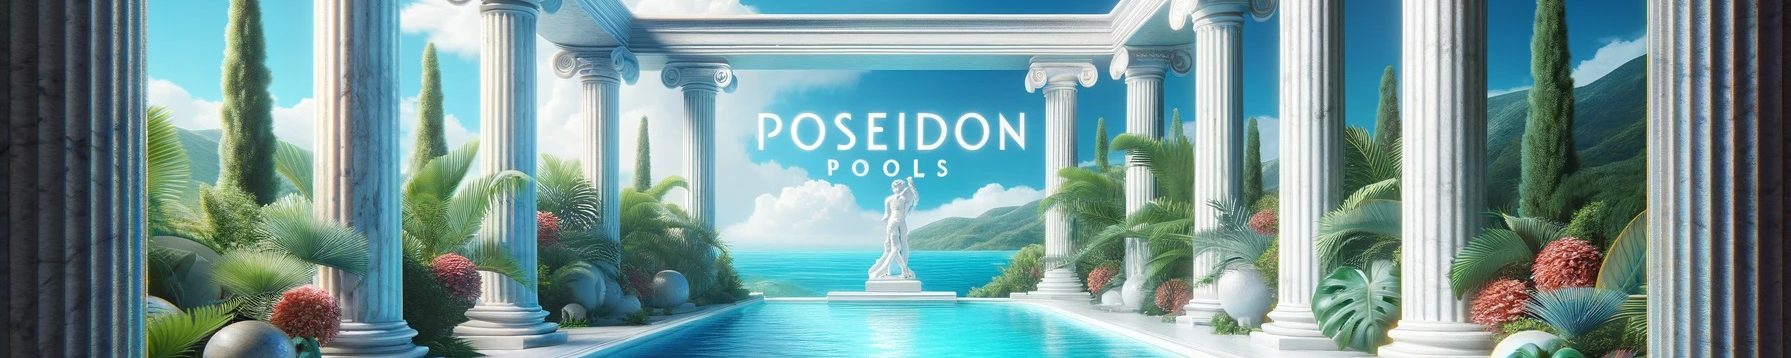 Poseidon Pools